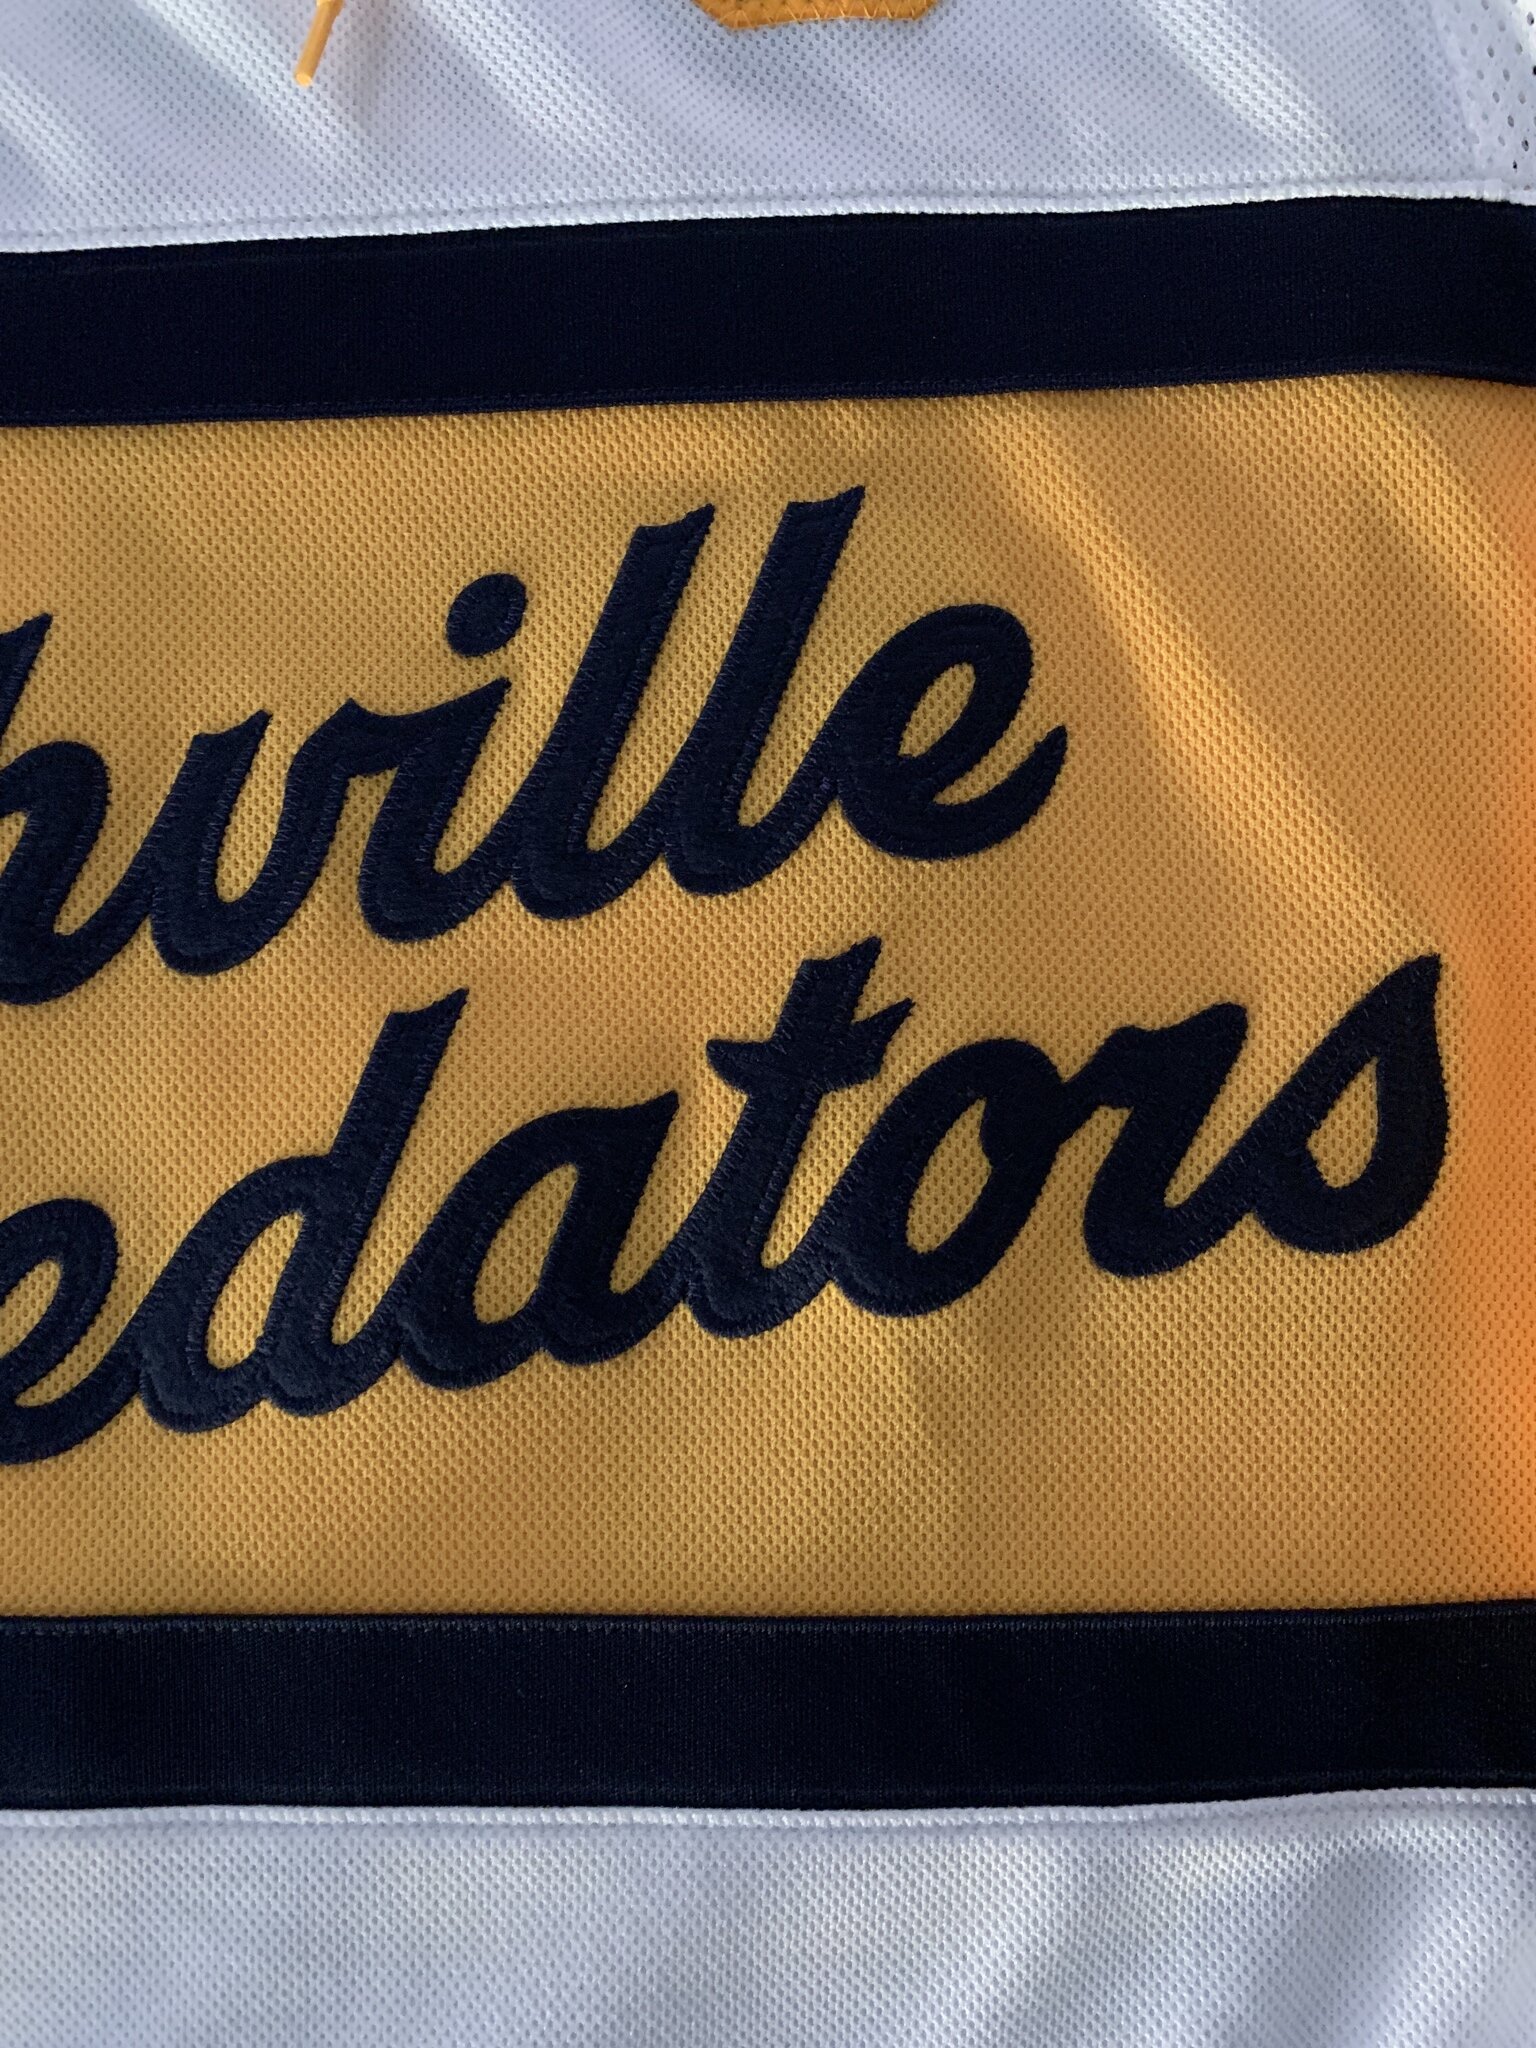 Nashville Predators Winter Classic Jerseys: Made in Canada (on-ice) vs.  adidas adizero — Desert Hockey Threads